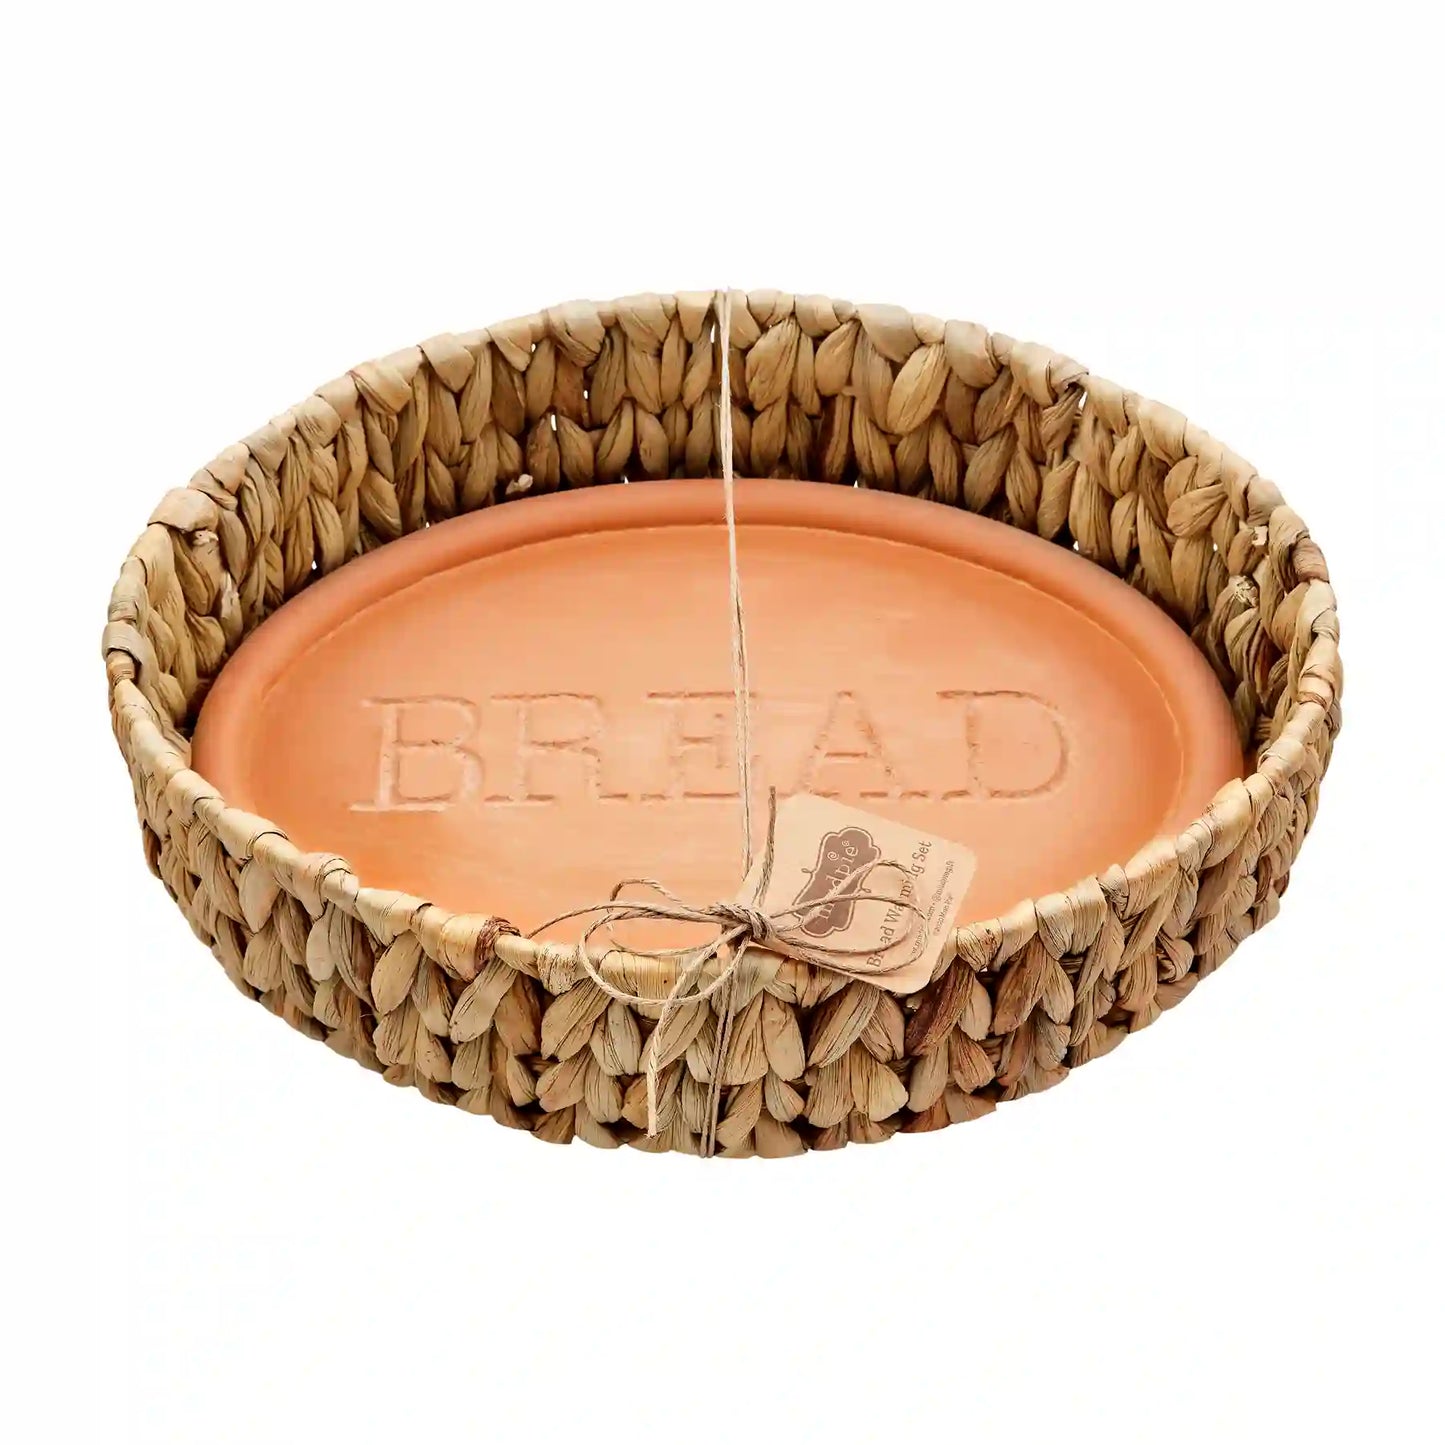 MUD PIE Bread Basket with Warming Stone